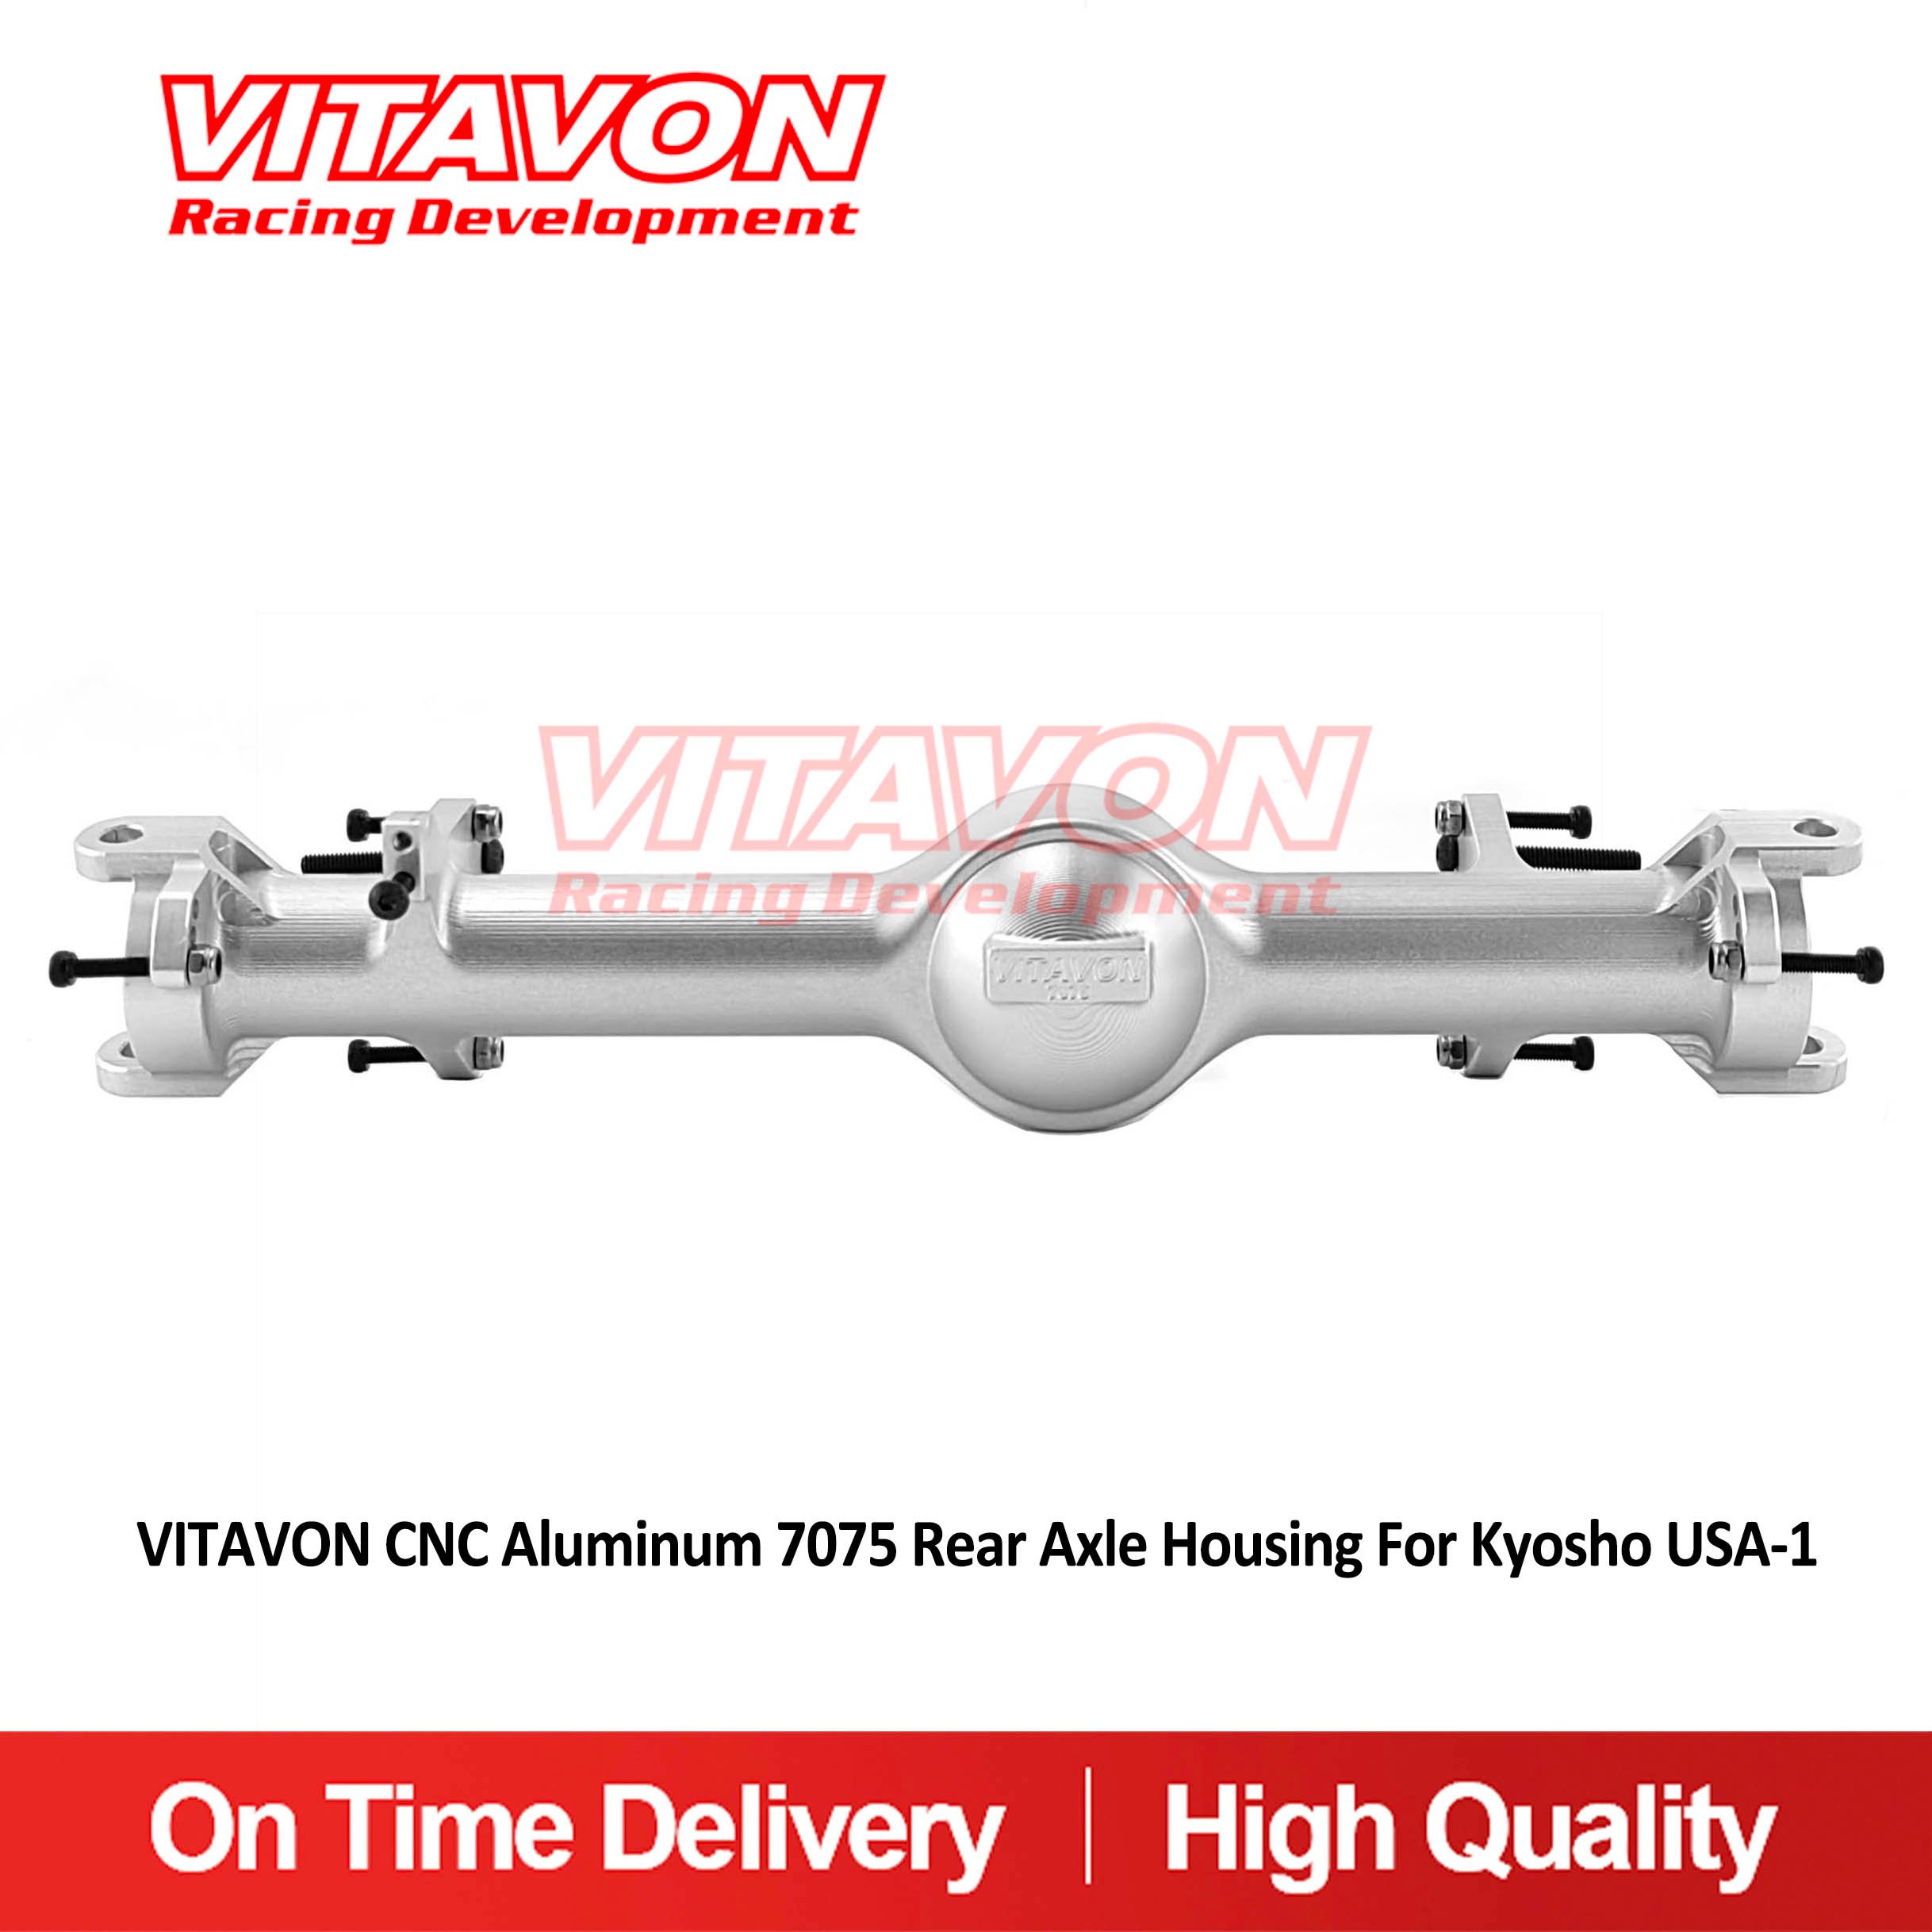 VITAVON CNC Aluminum 7075 Rear Axle Housing For Kyosho USA-1